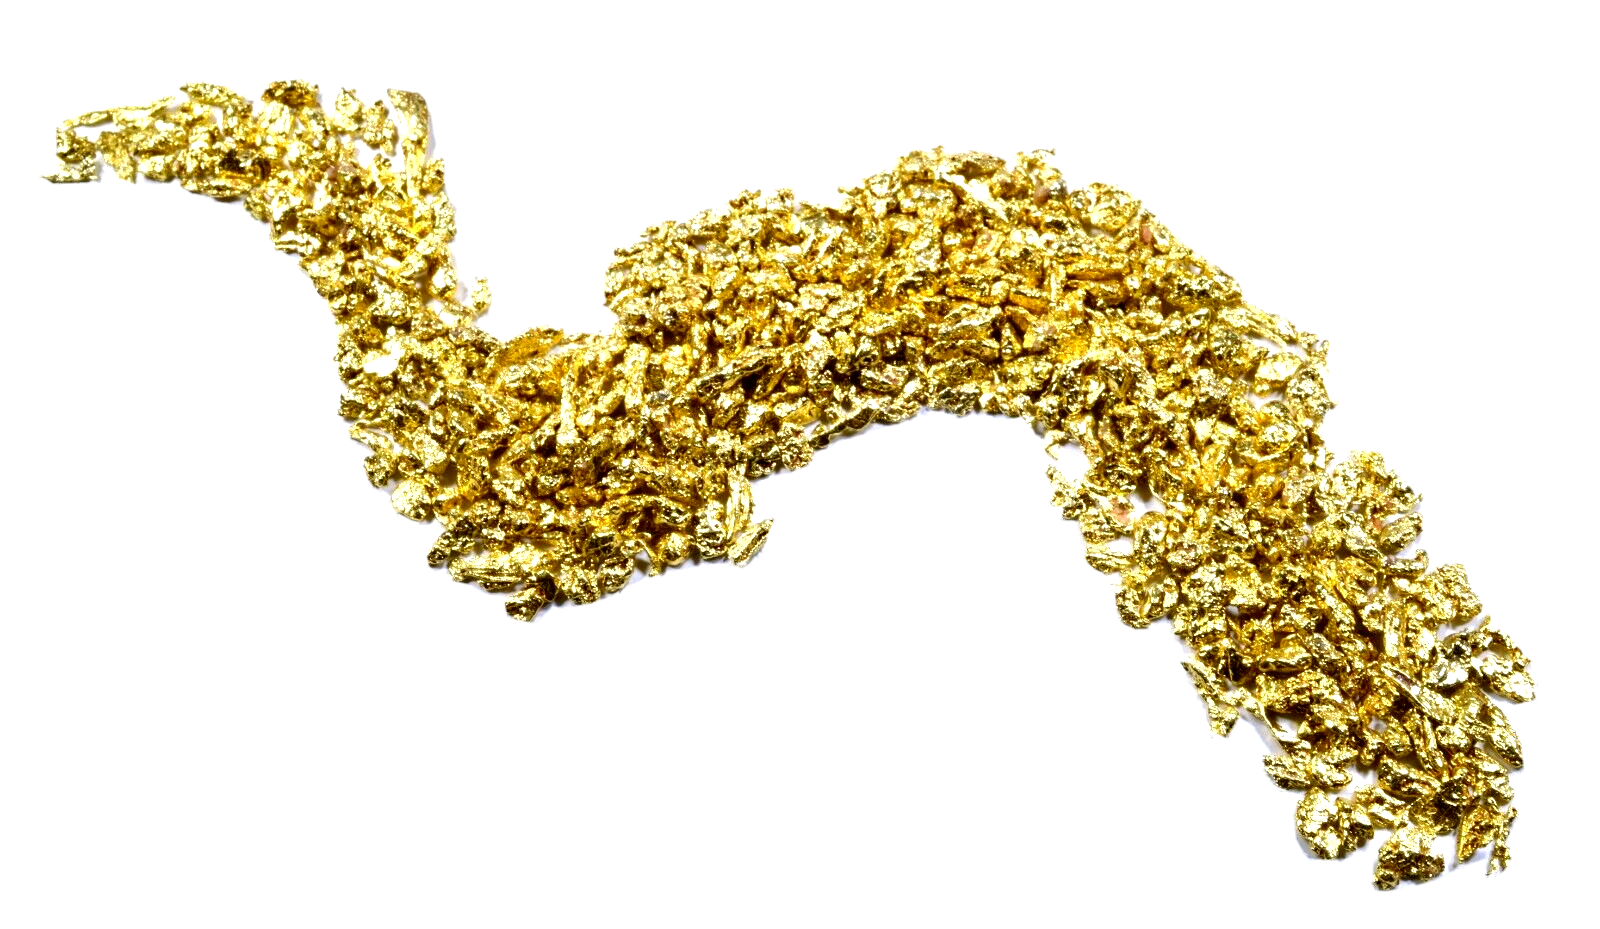 5.000 GRAMS ALASKAN YUKON BC NATURAL PURE GOLD NUGGETS #12 MESH - LIQUID BULLION 